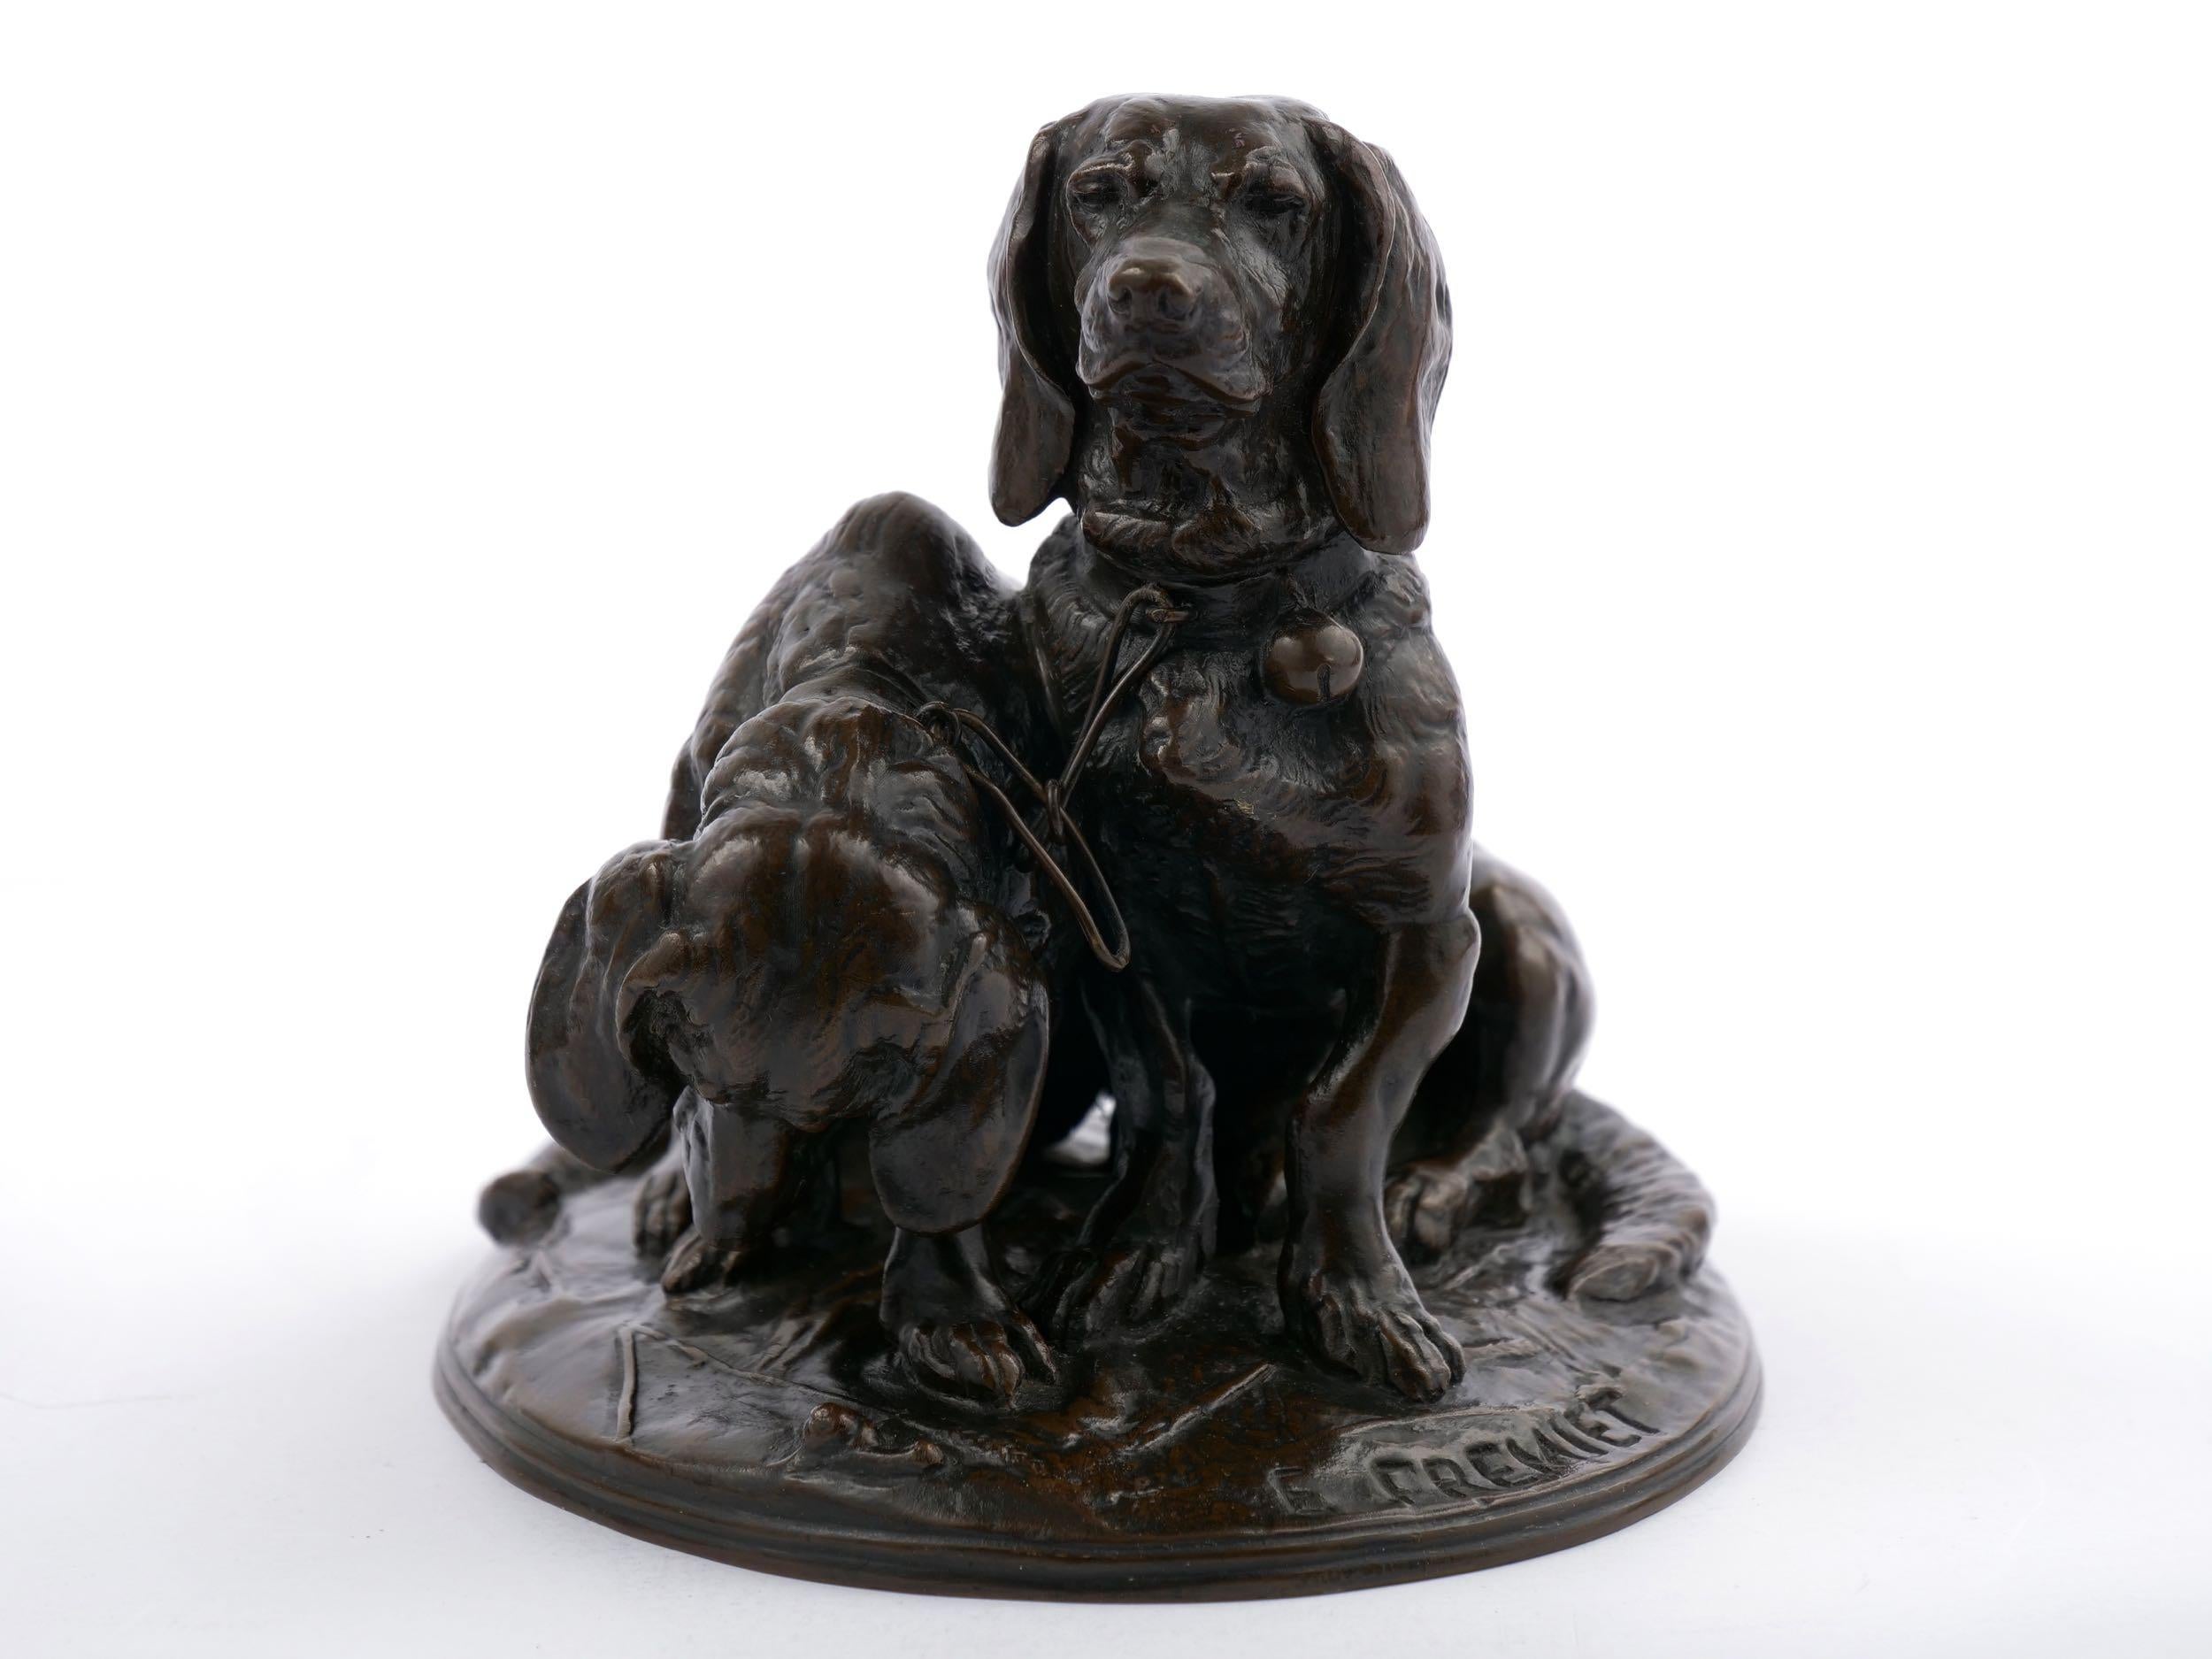 19th Century Emmanuel Fremiet French Antique Bronze Sculpture of Two Basset Hound Dogs